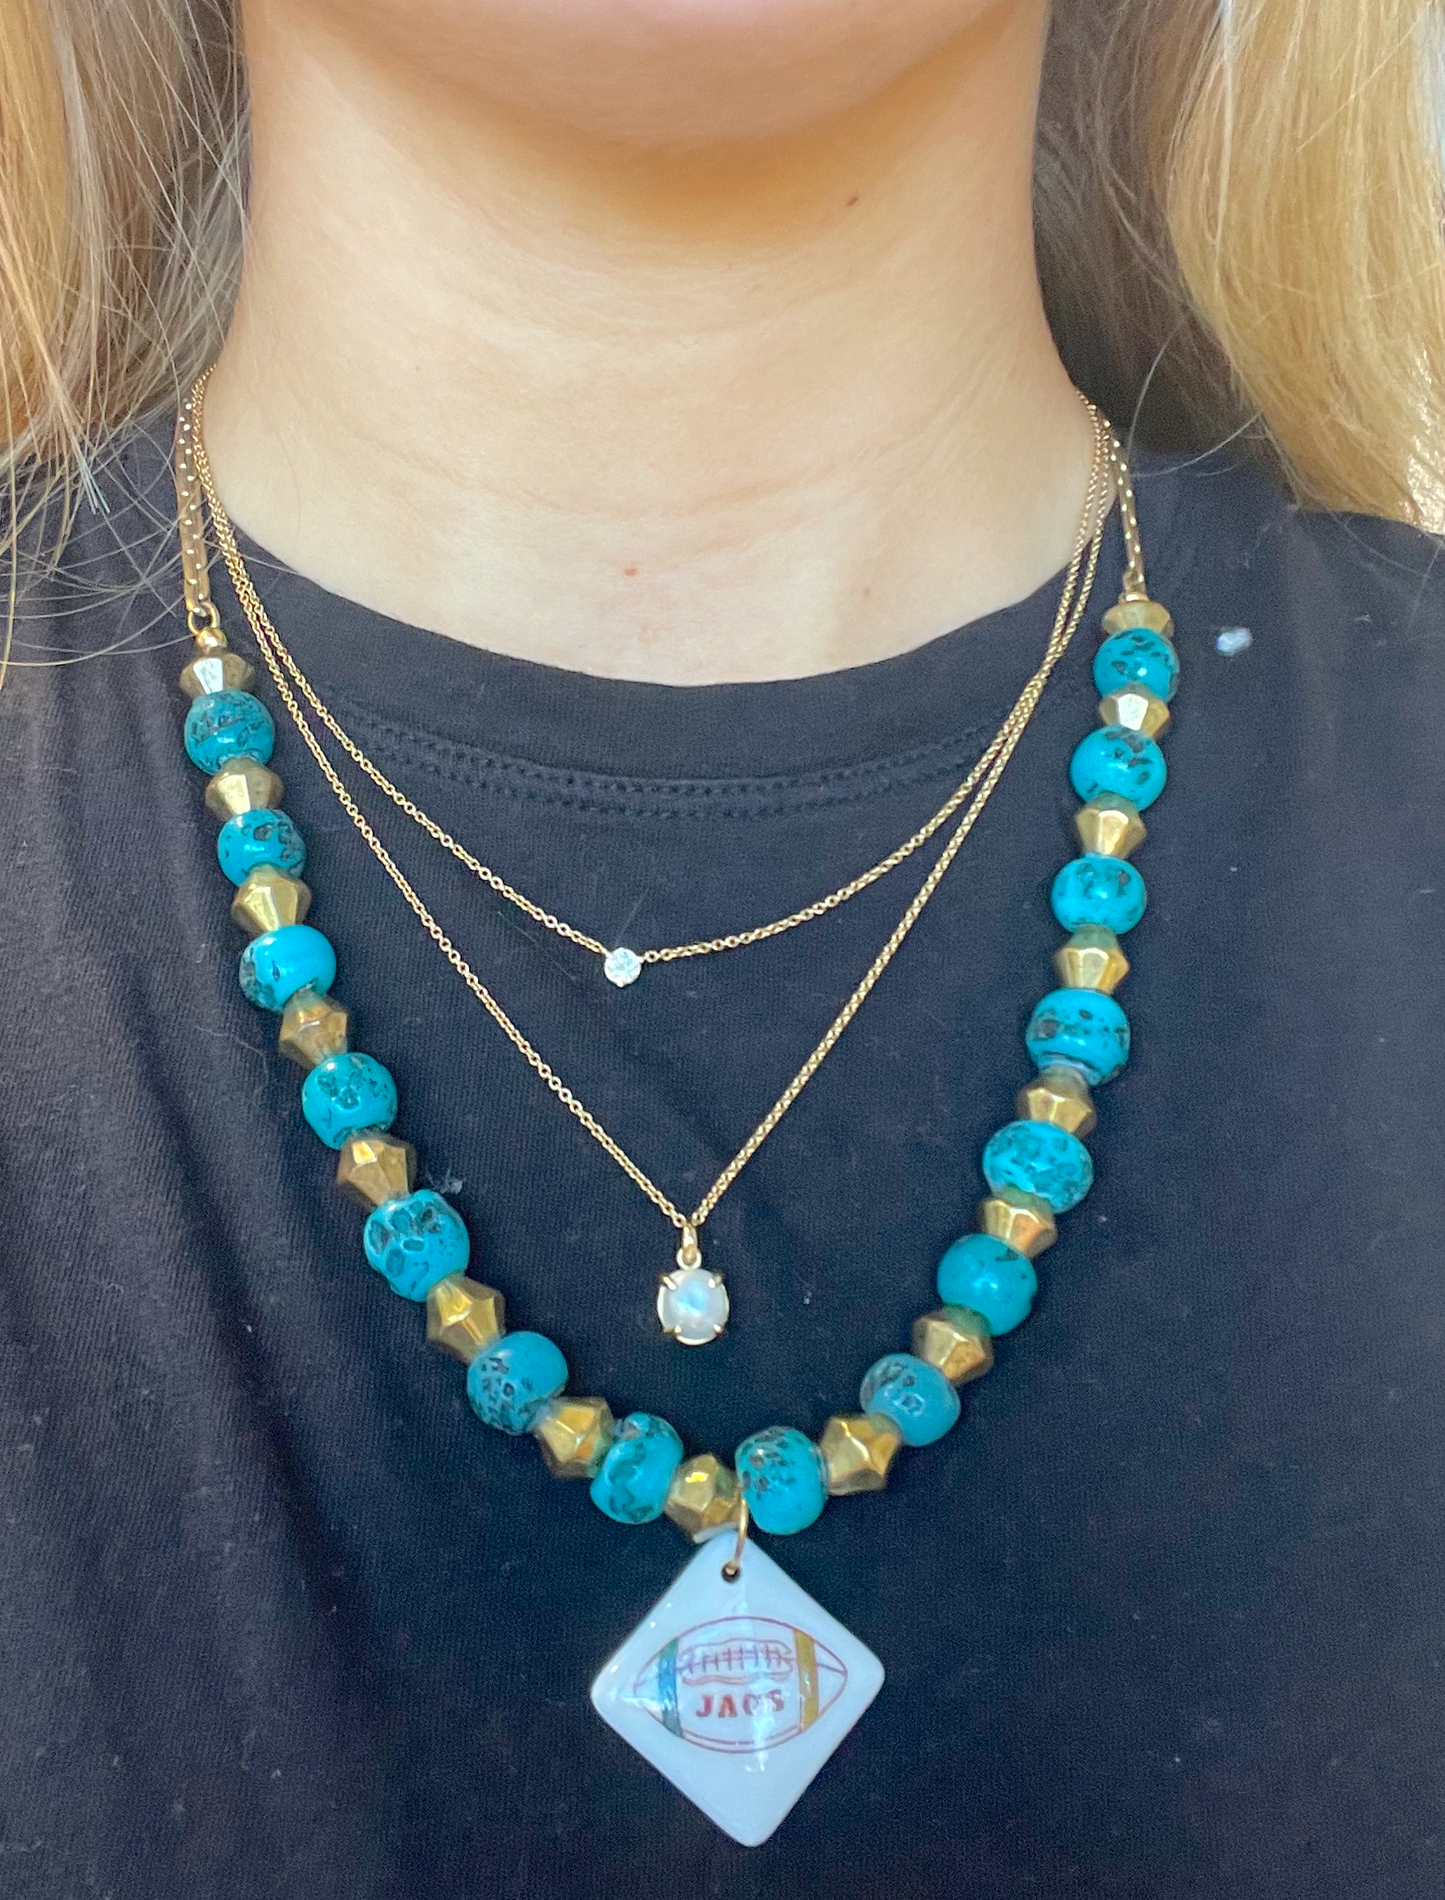 Jaguar necklace porcelain pendant football lover gift